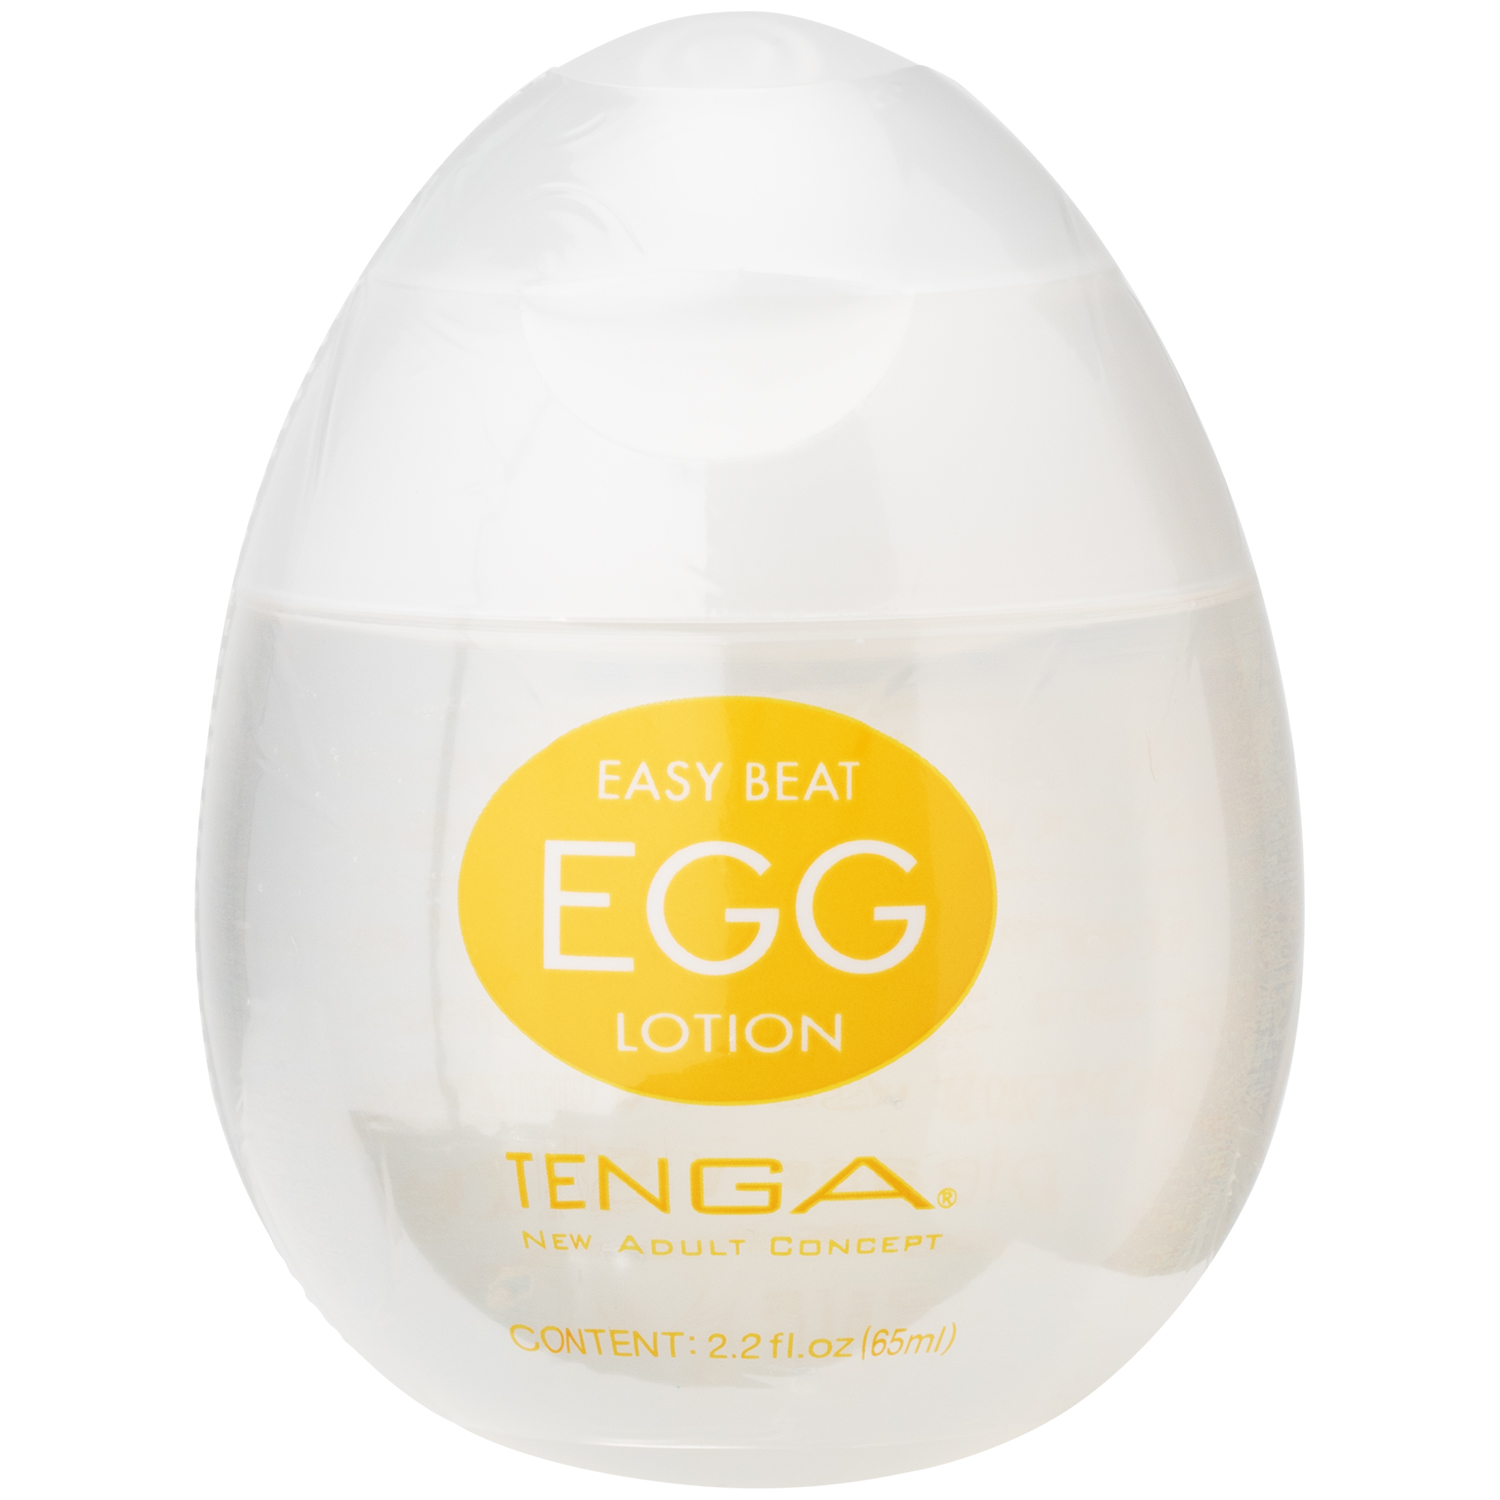 TENGA Egg Lotion Glidmedel 65 ml - Klar